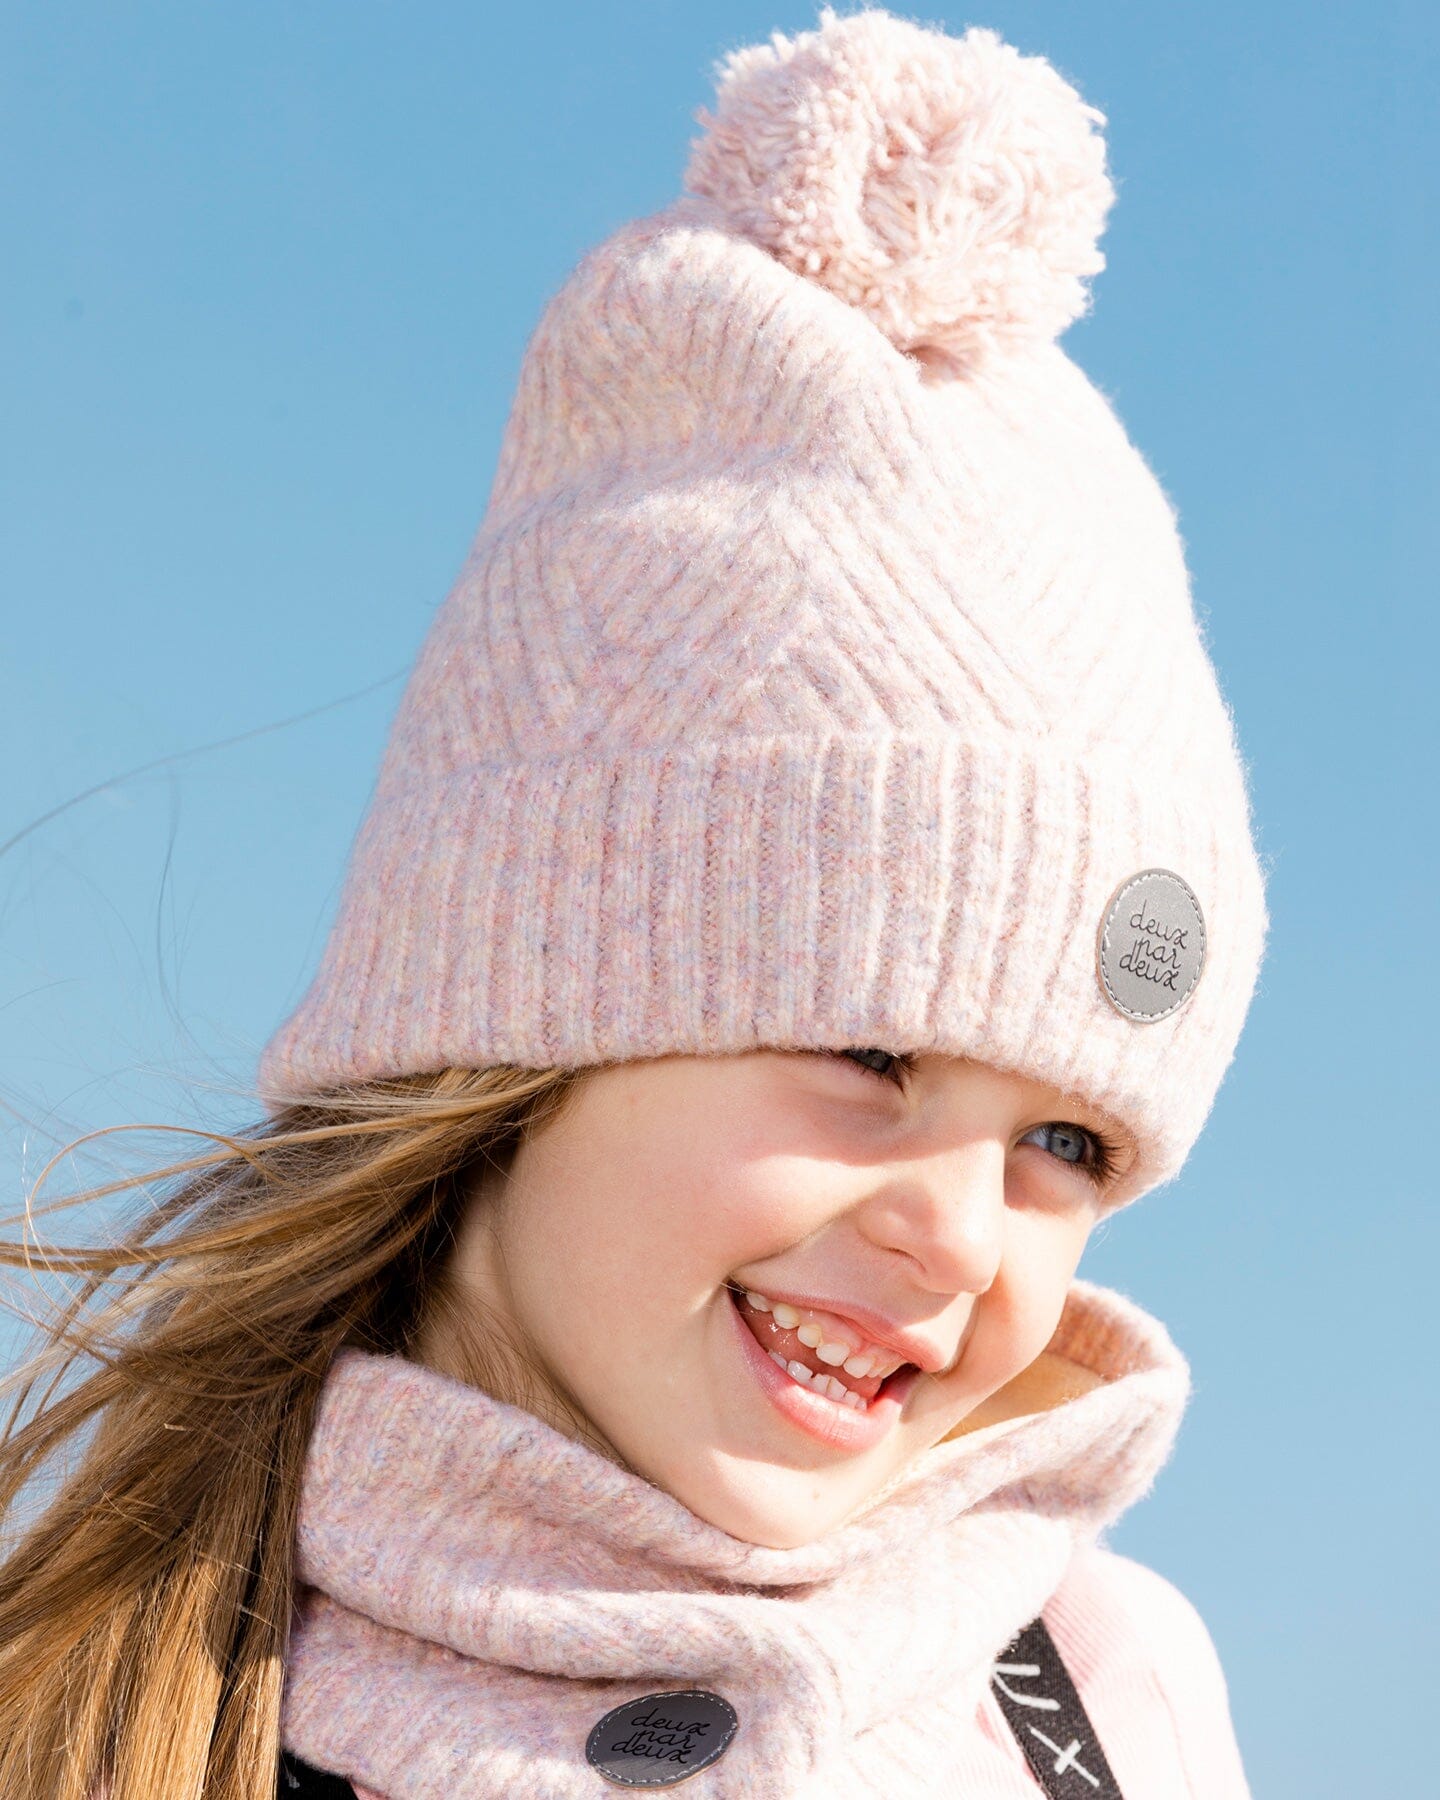 Textured Knitted Neckwarmer Light Pink Winter Accessories Deux par Deux 